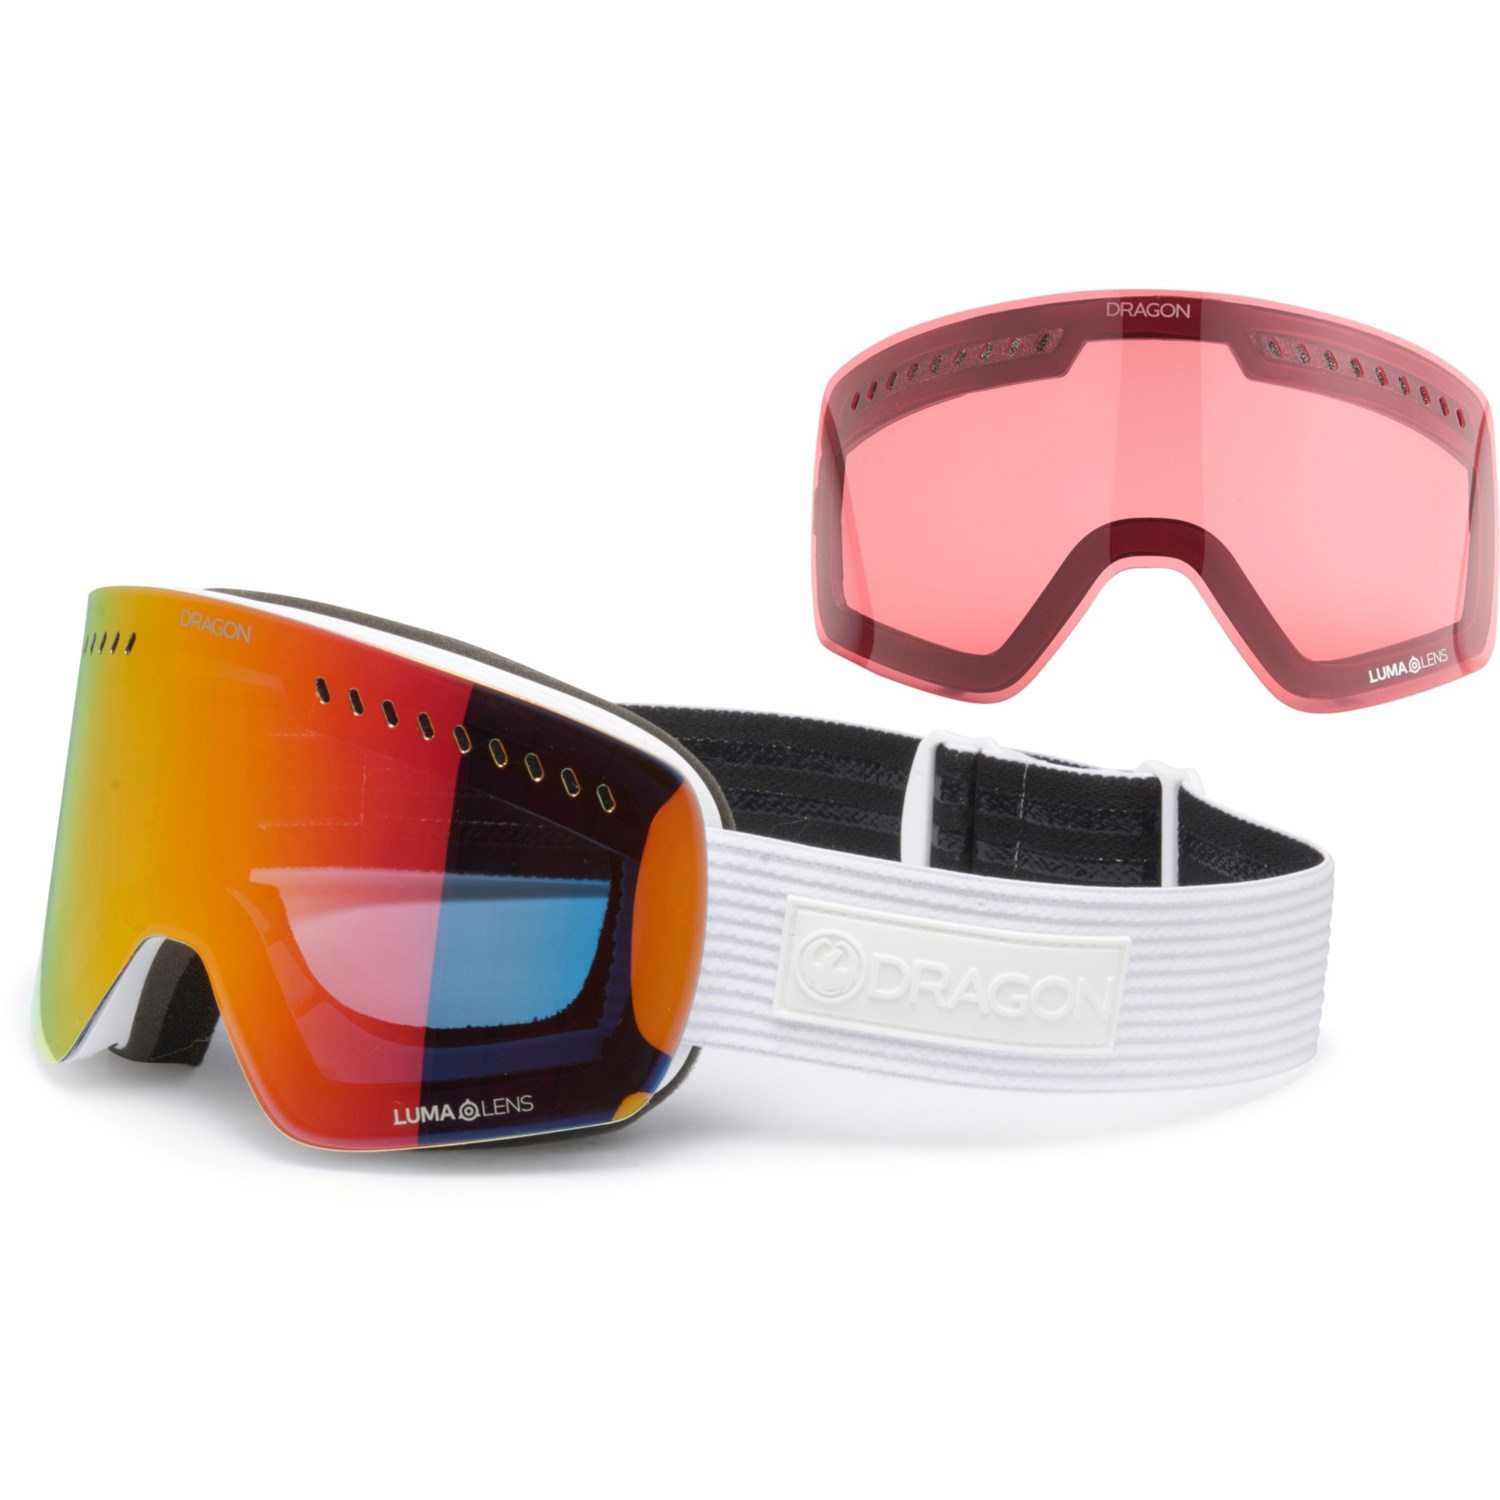 Dragon Alliance NFXS Ski Goggles 